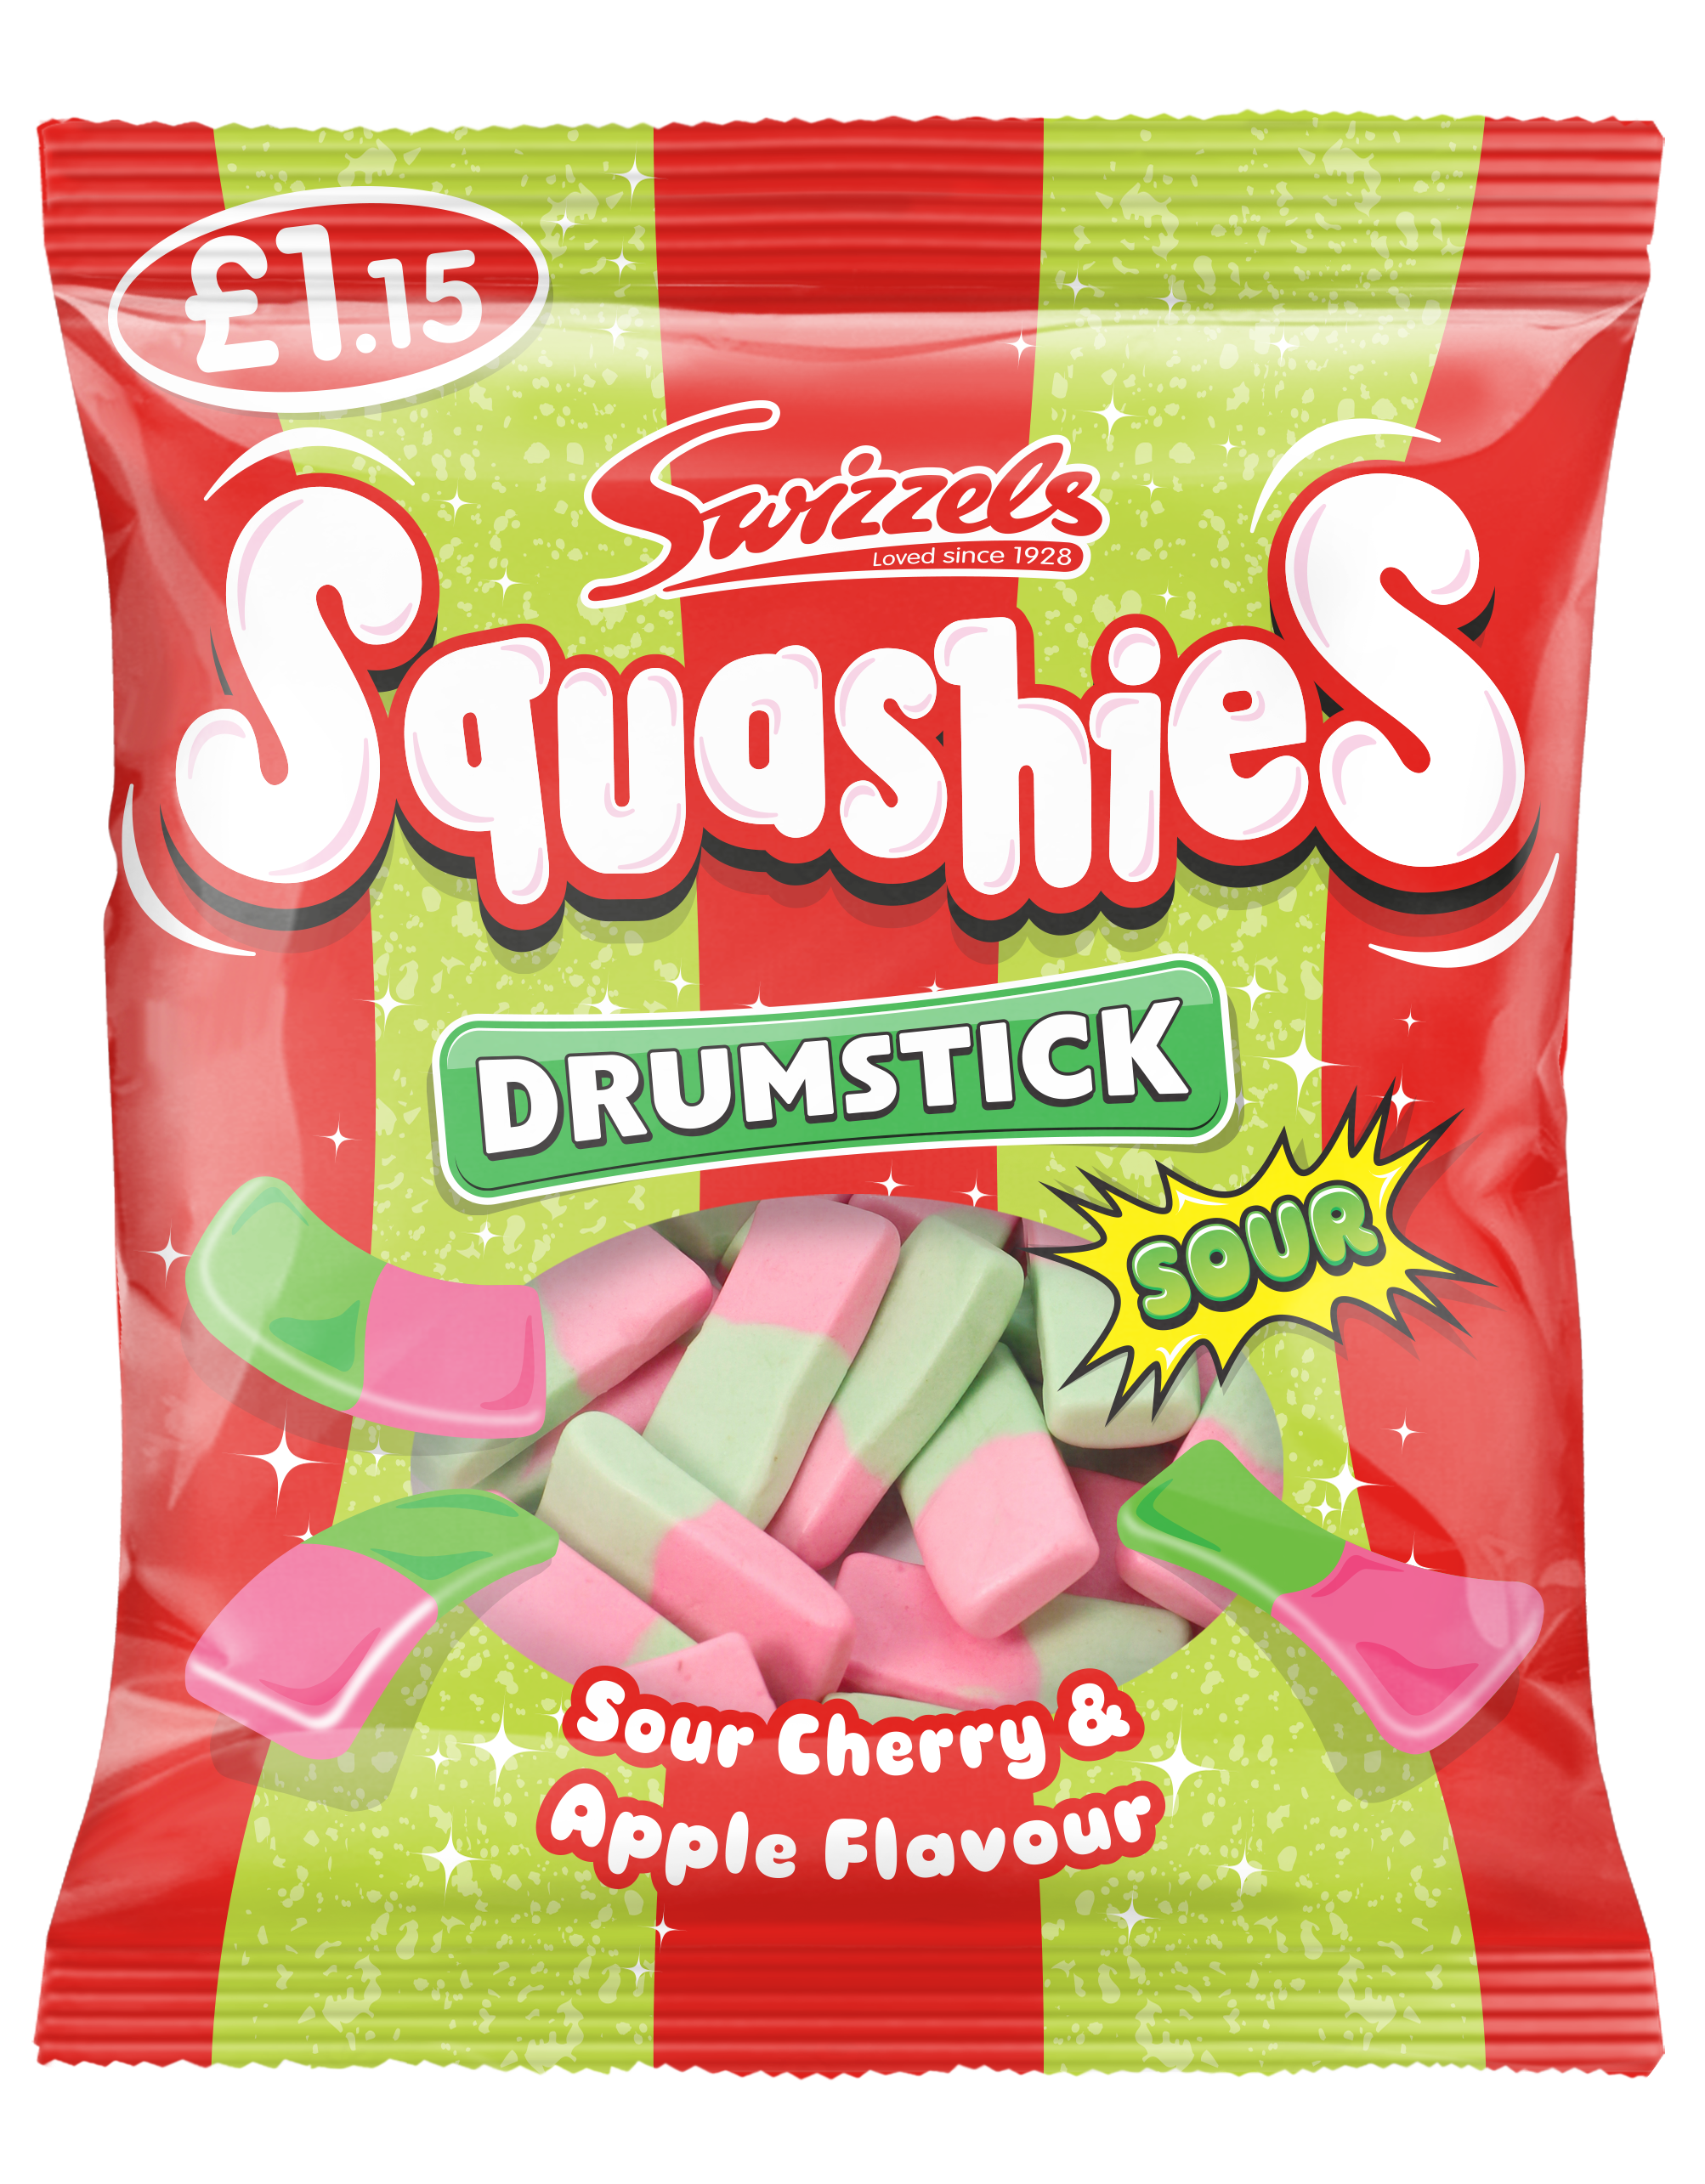 Swizzels Squashies Drumsticks Cherry & Apple PMP 12 x £1.15